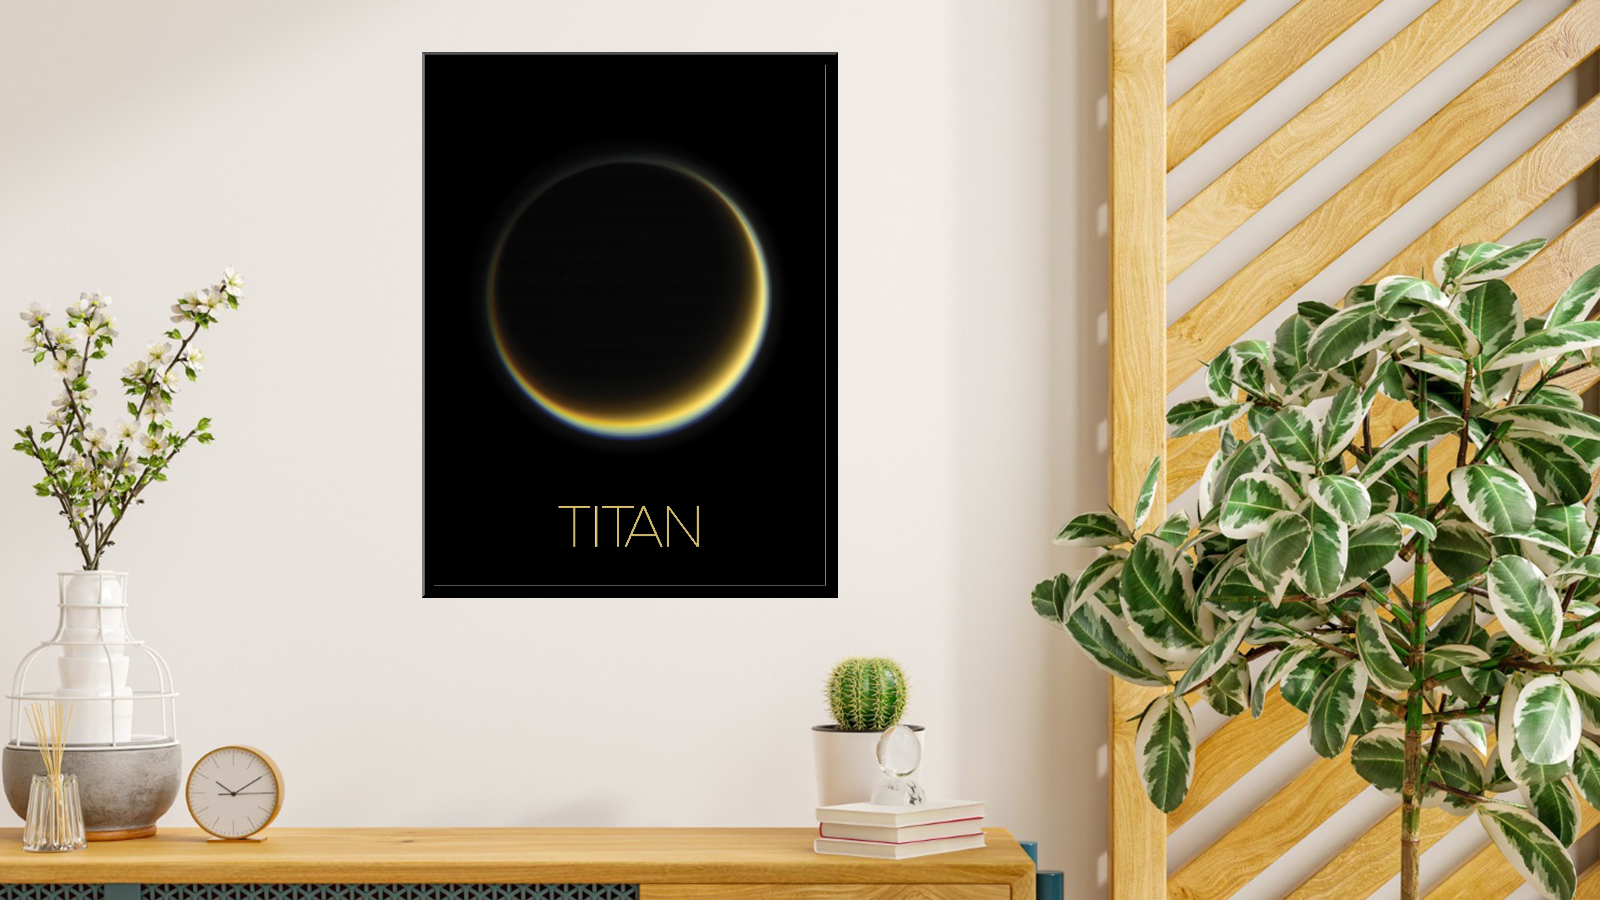 Titan's night side